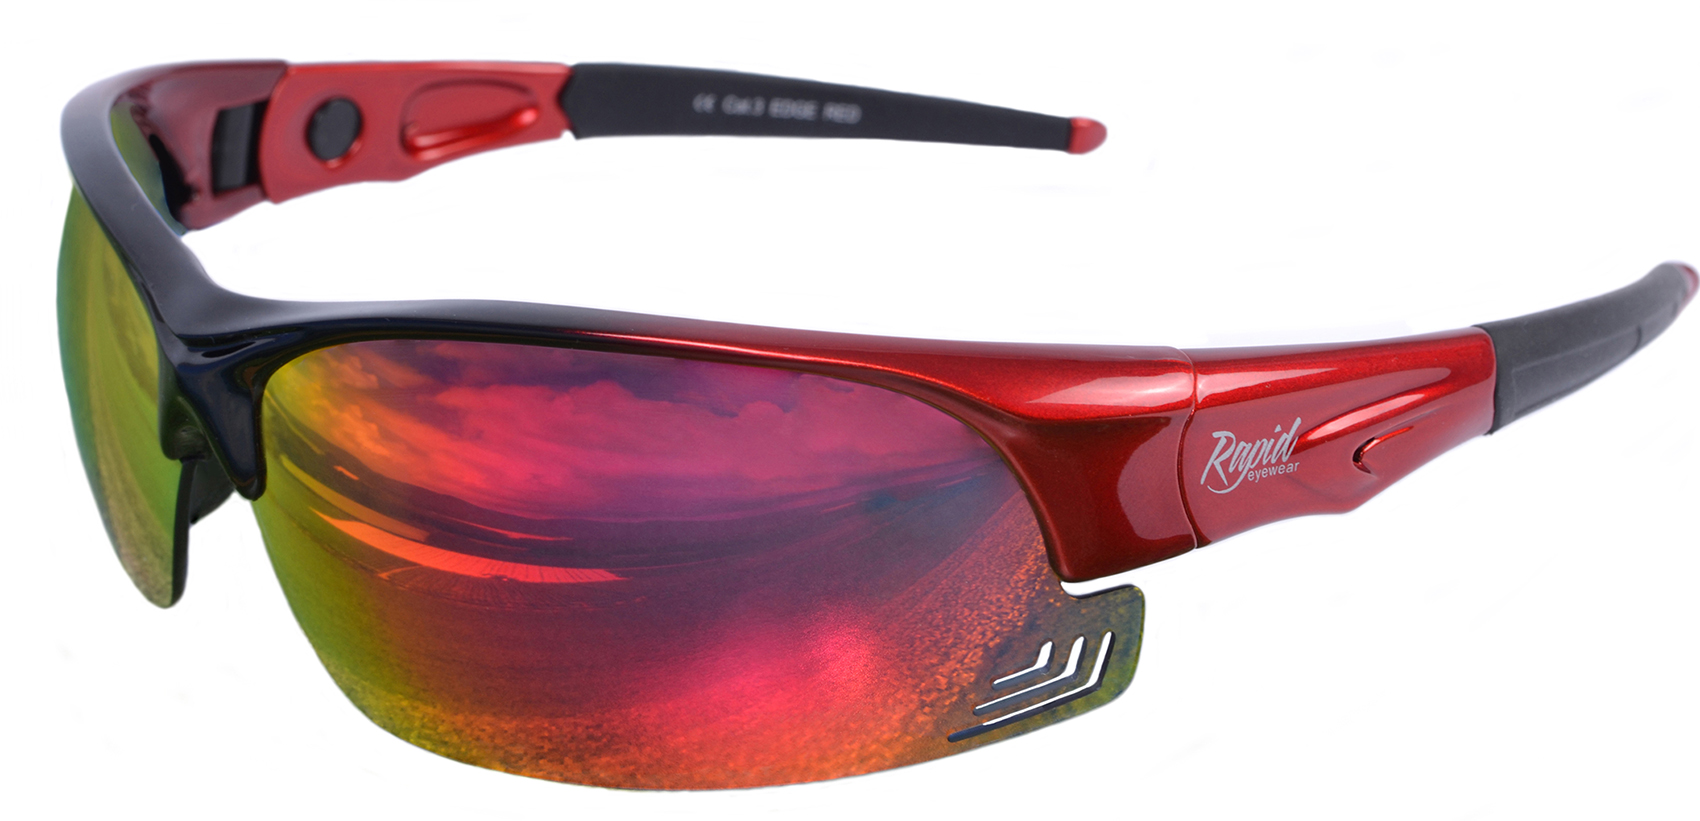 Red sunglasses for bikers moto mirrored lenses